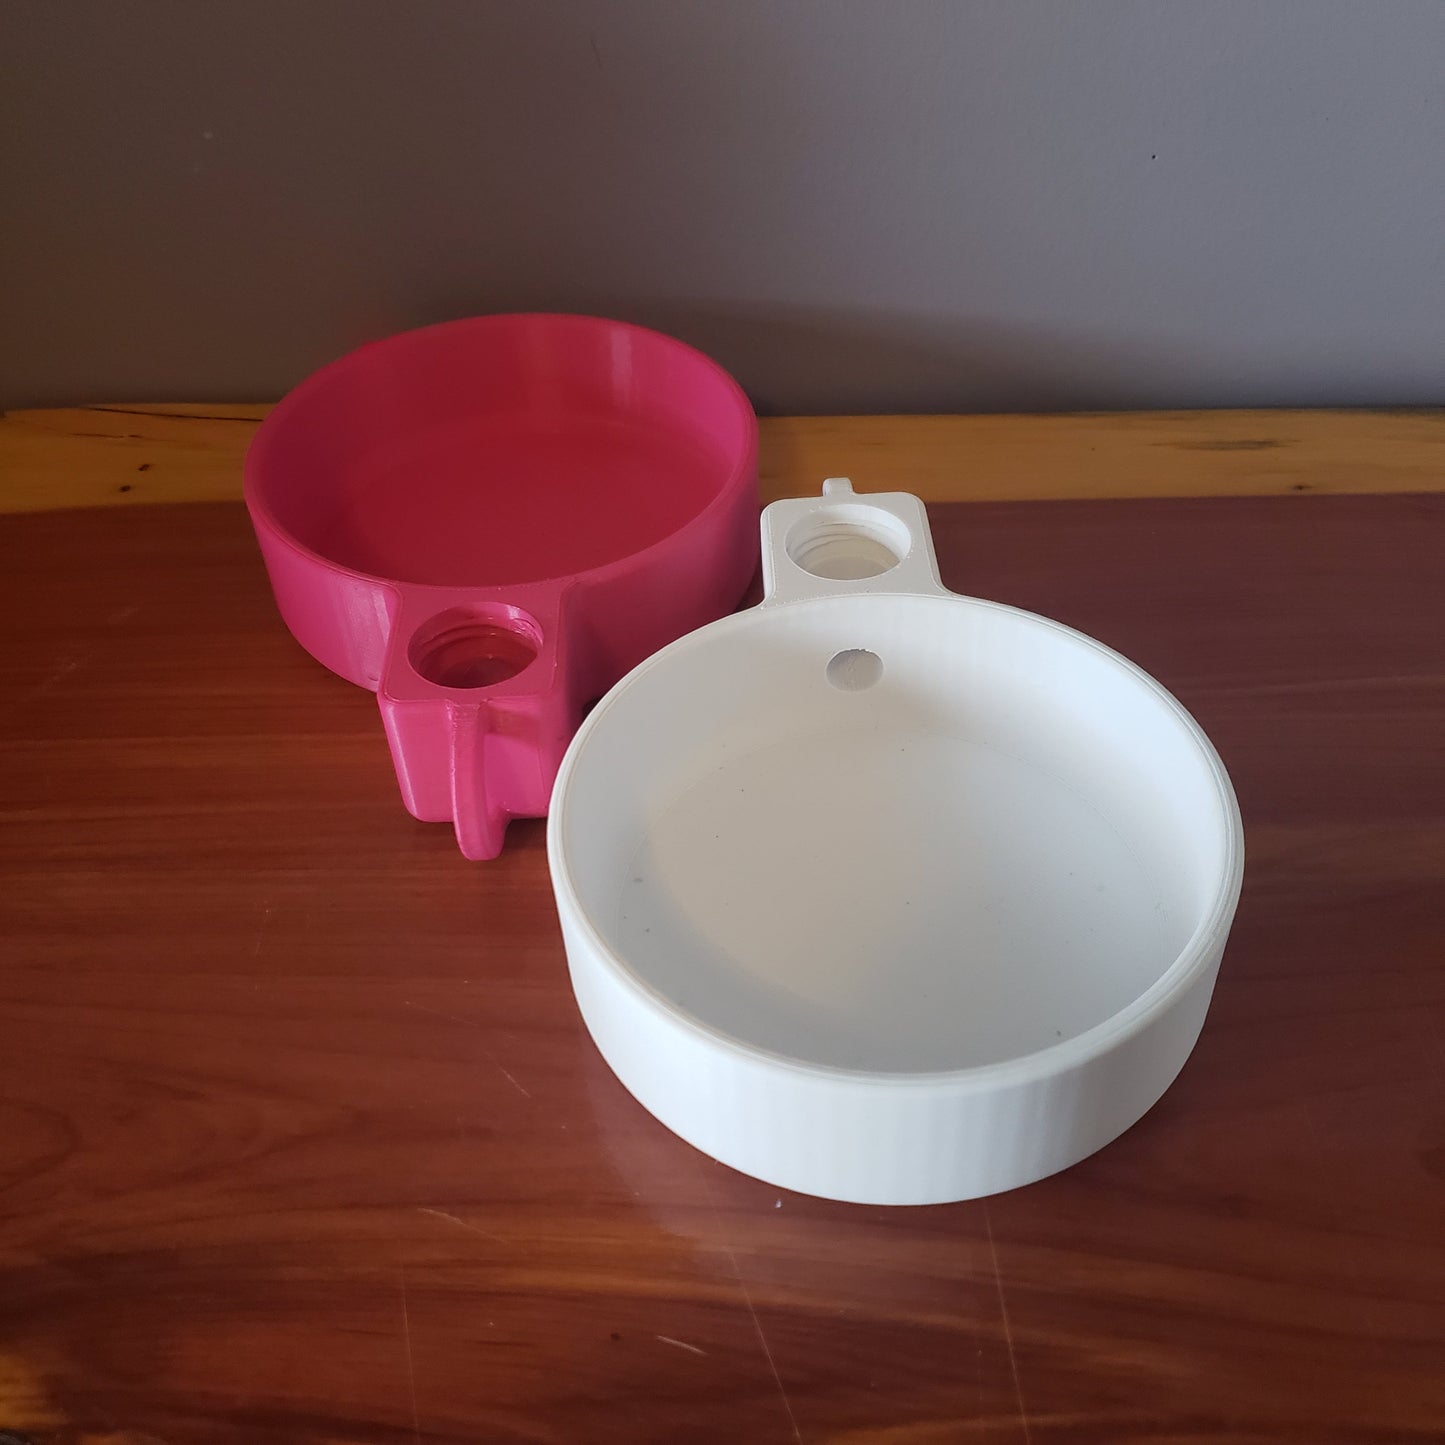 3D Printed Gravity Pet Water Bowl Waterer - Pet Travel Accessory